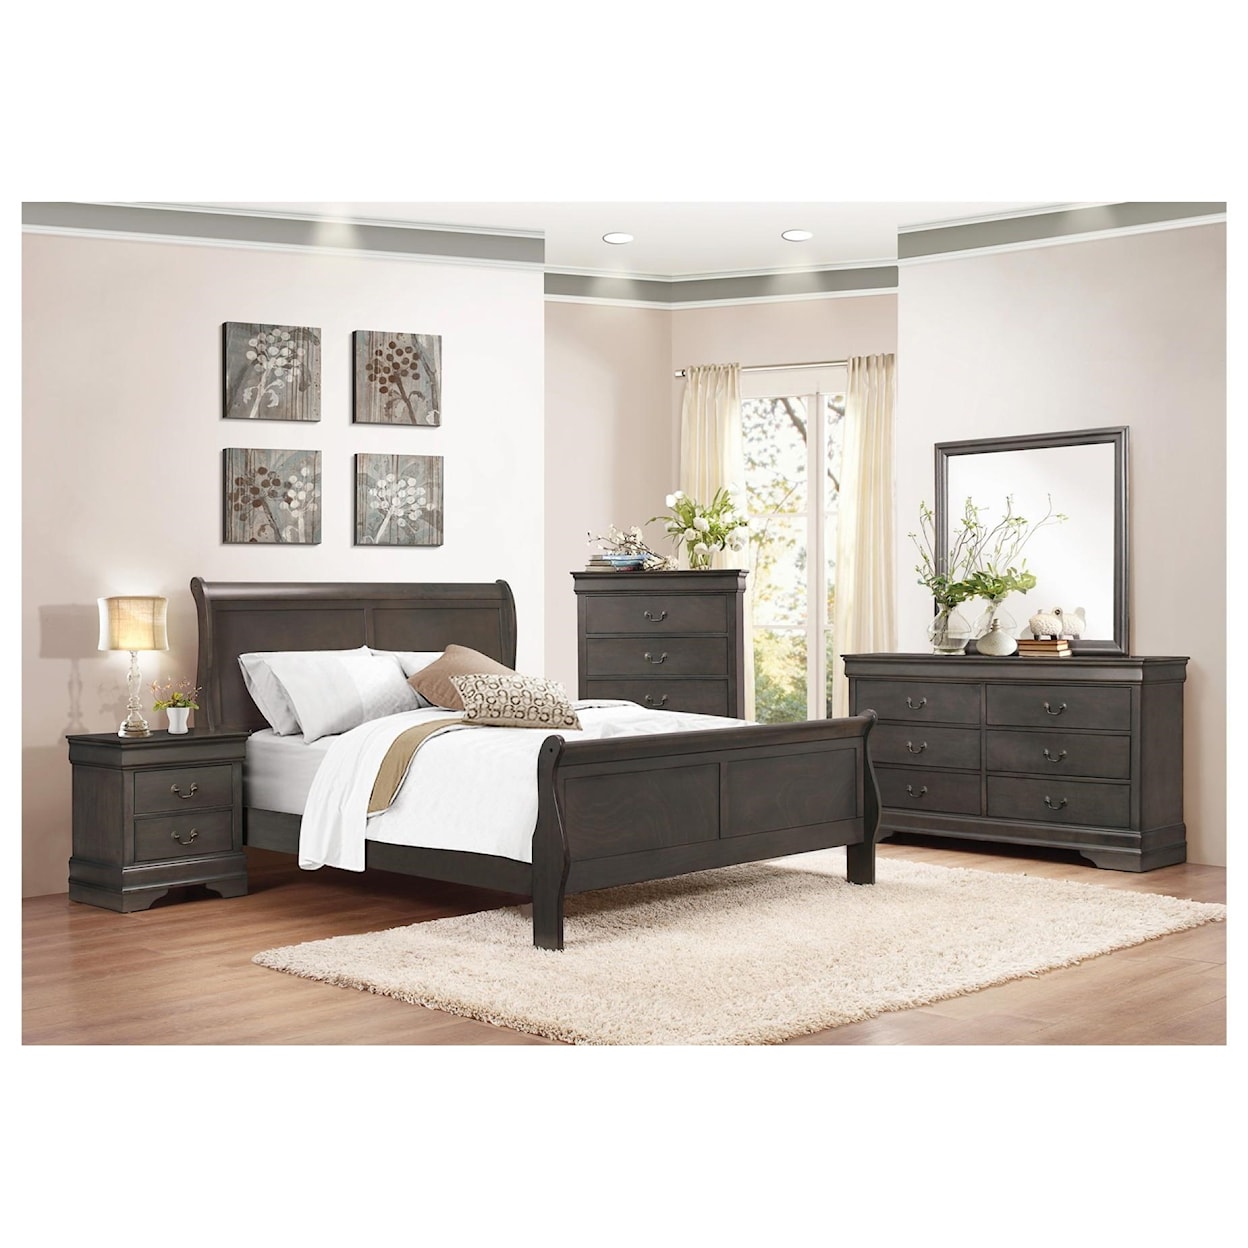 Homelegance Furniture Mayville Queen Bedroom Group